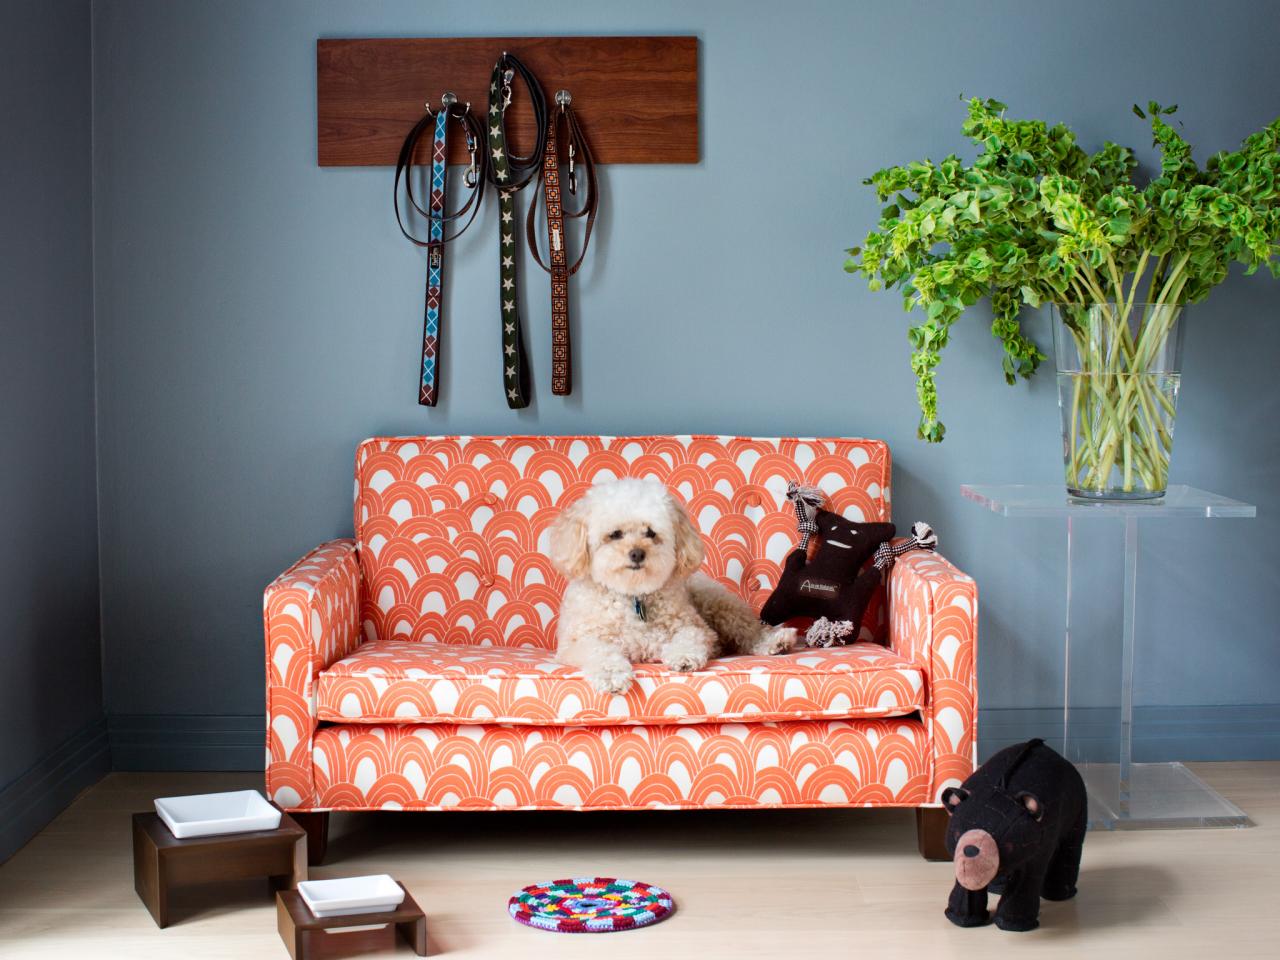 19 Awesome Dog Spaces + 5 Dog Treat Recipes | HGTV's ...